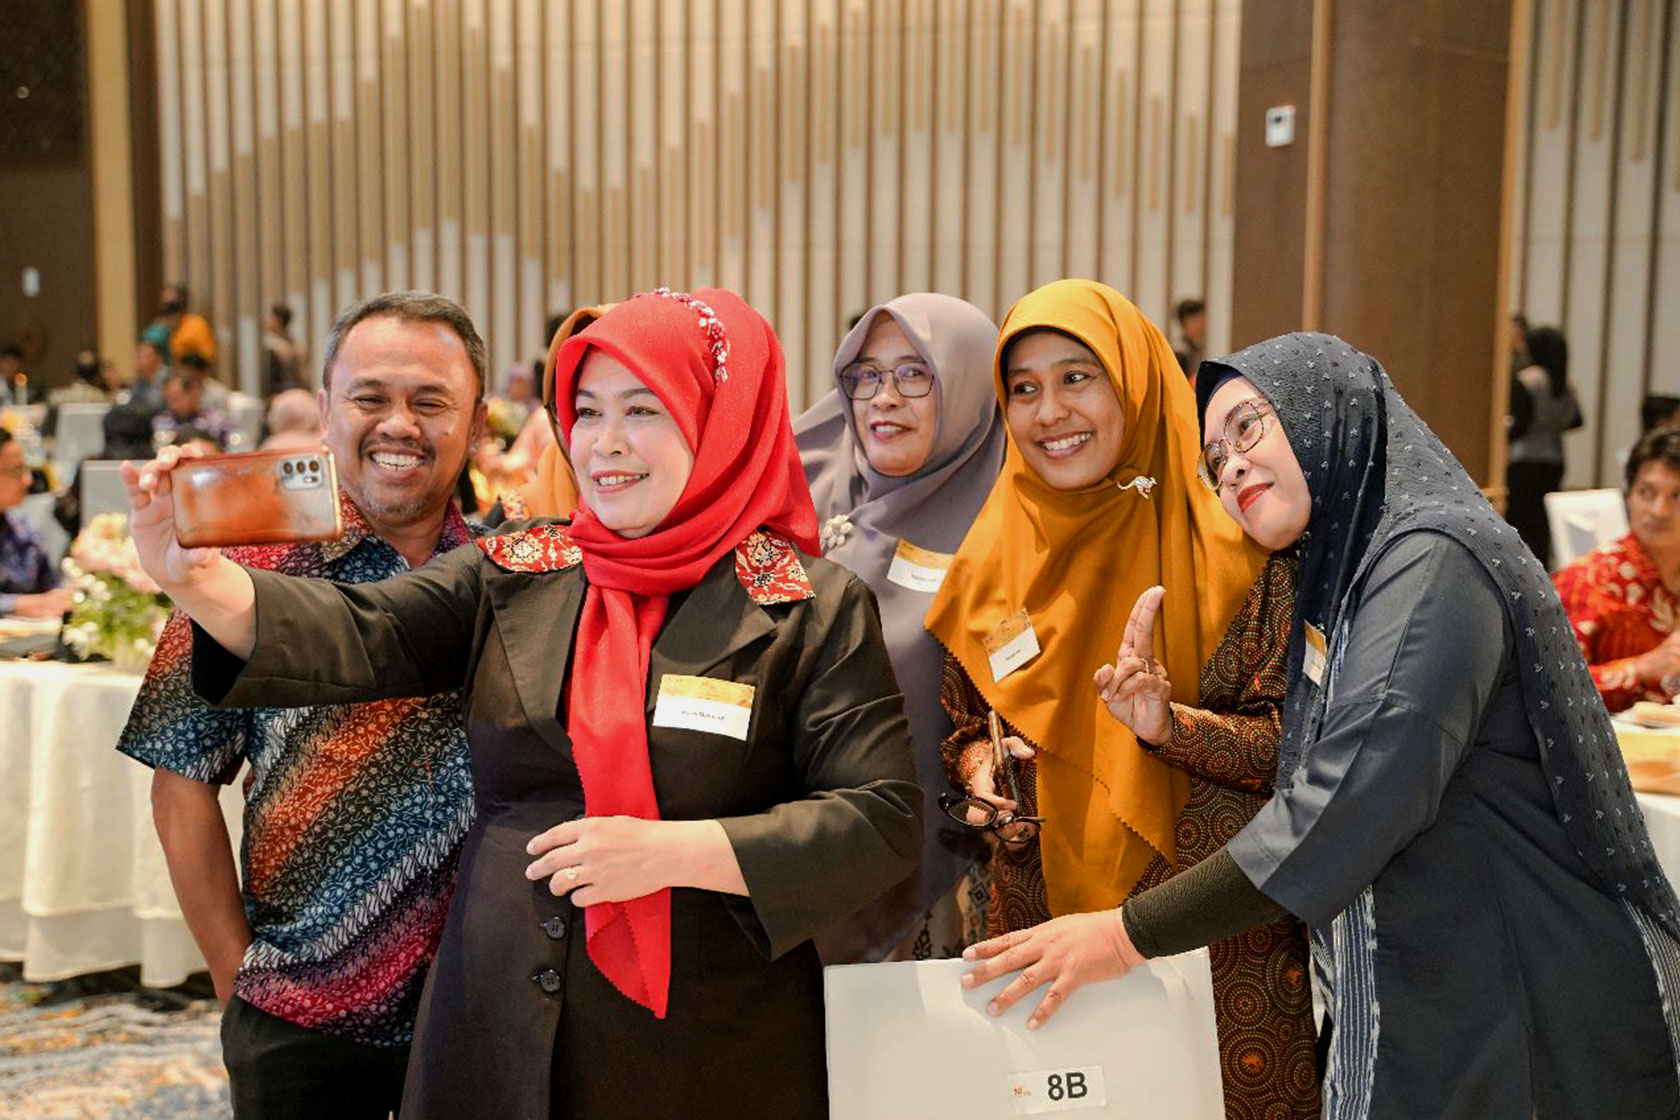 Australian Alumni unite: A captivating snapshot of camaraderie at the Gala Dinner in Makassar